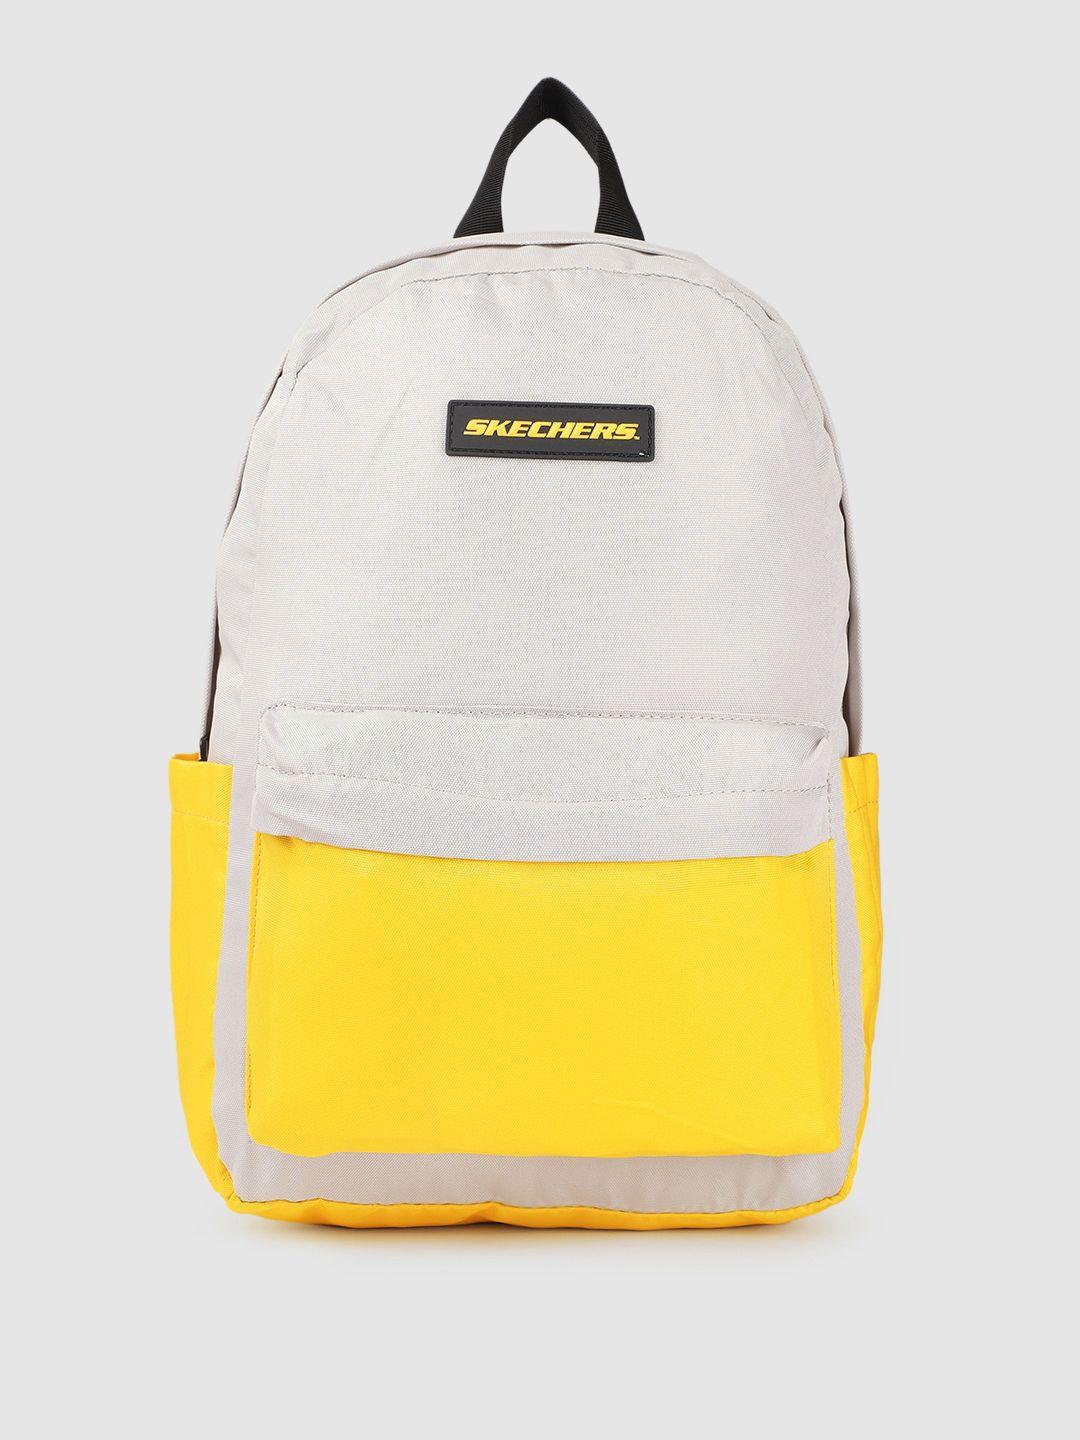 skechers-unisex-colourblocked-laptop-backpack